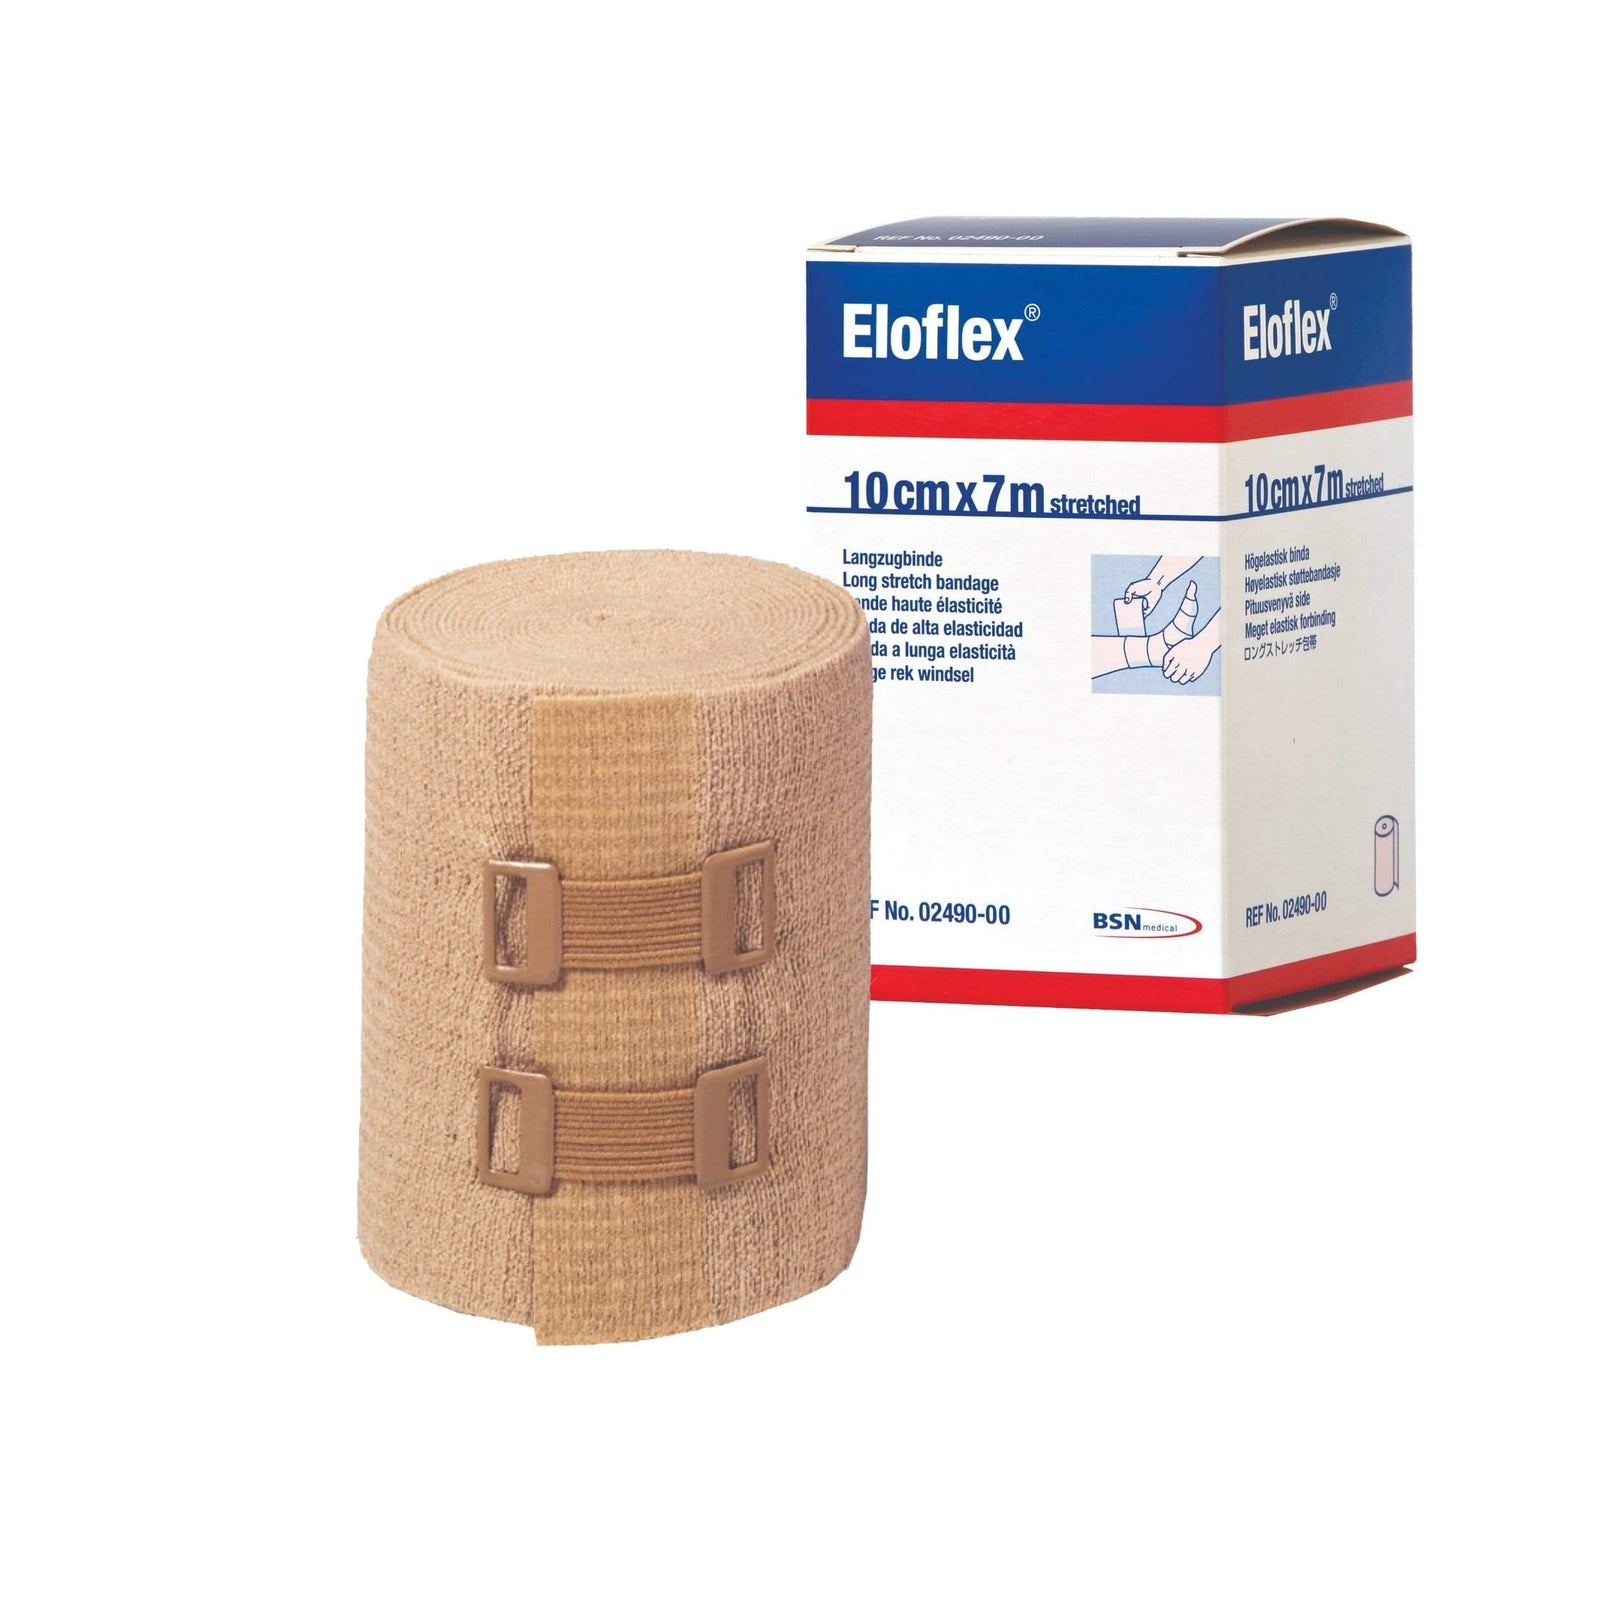 BSN Medical Eloflex Compression Bandages